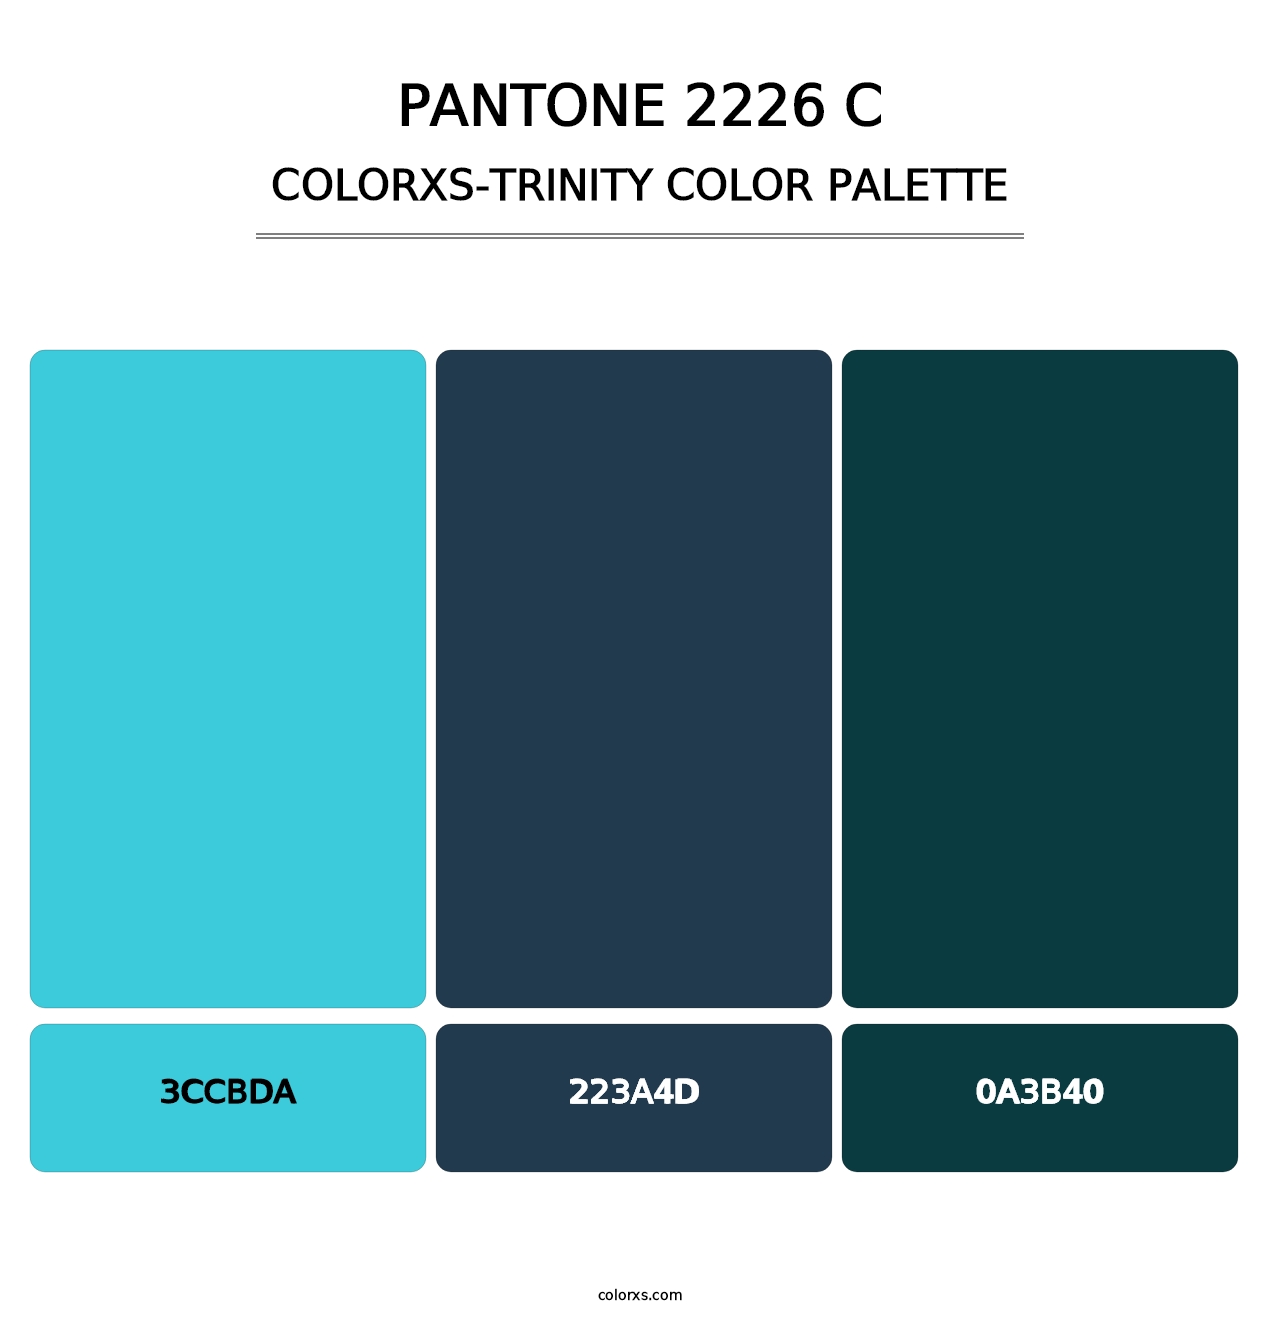 PANTONE 2226 C - Colorxs Trinity Palette